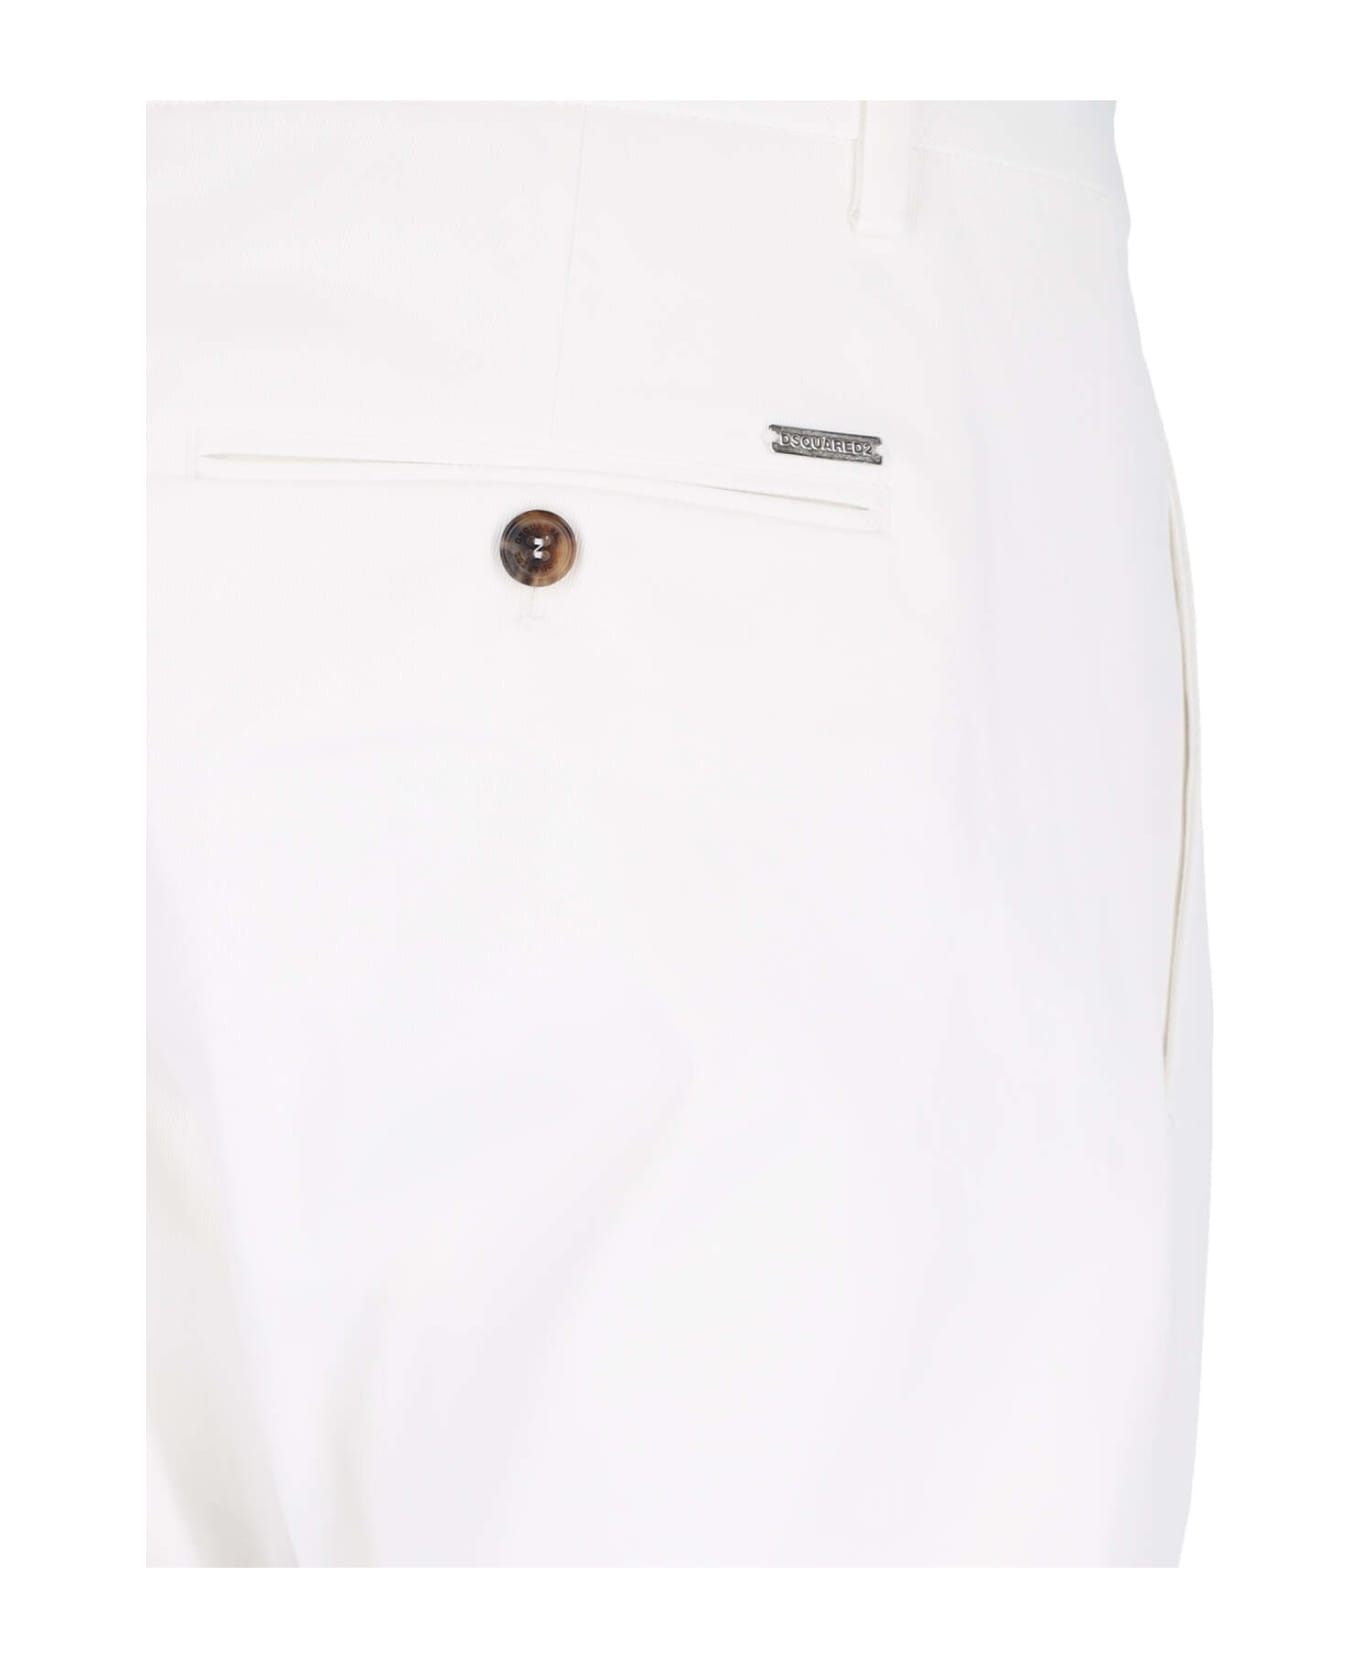 Dsquared2 Slim Pants - White